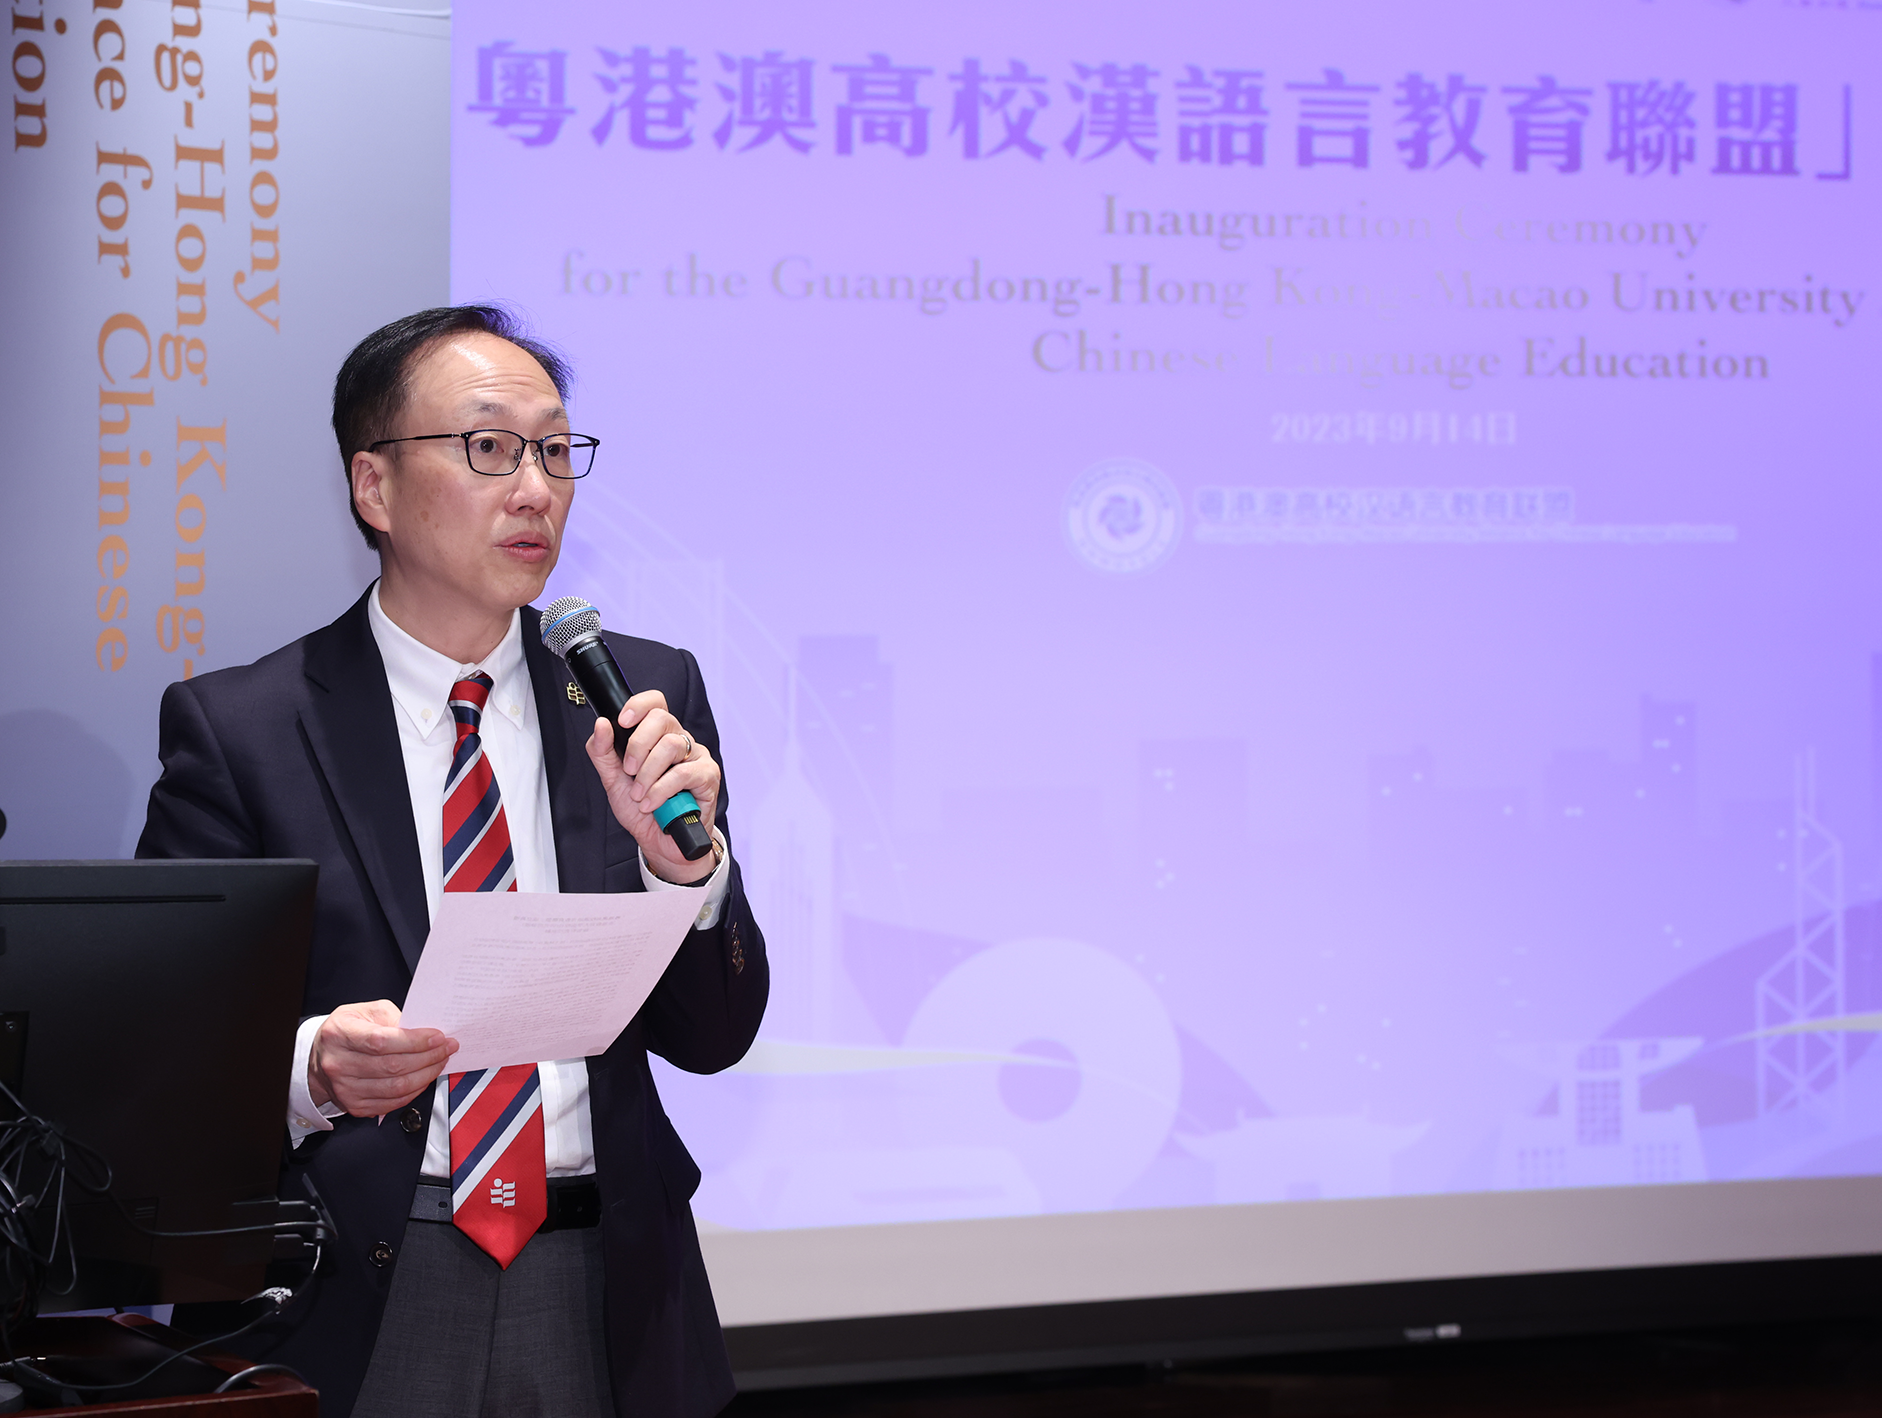 EdUHK Vice President (Research and Development) Professor Chetwyn Chan Che-hin addresses the ceremon